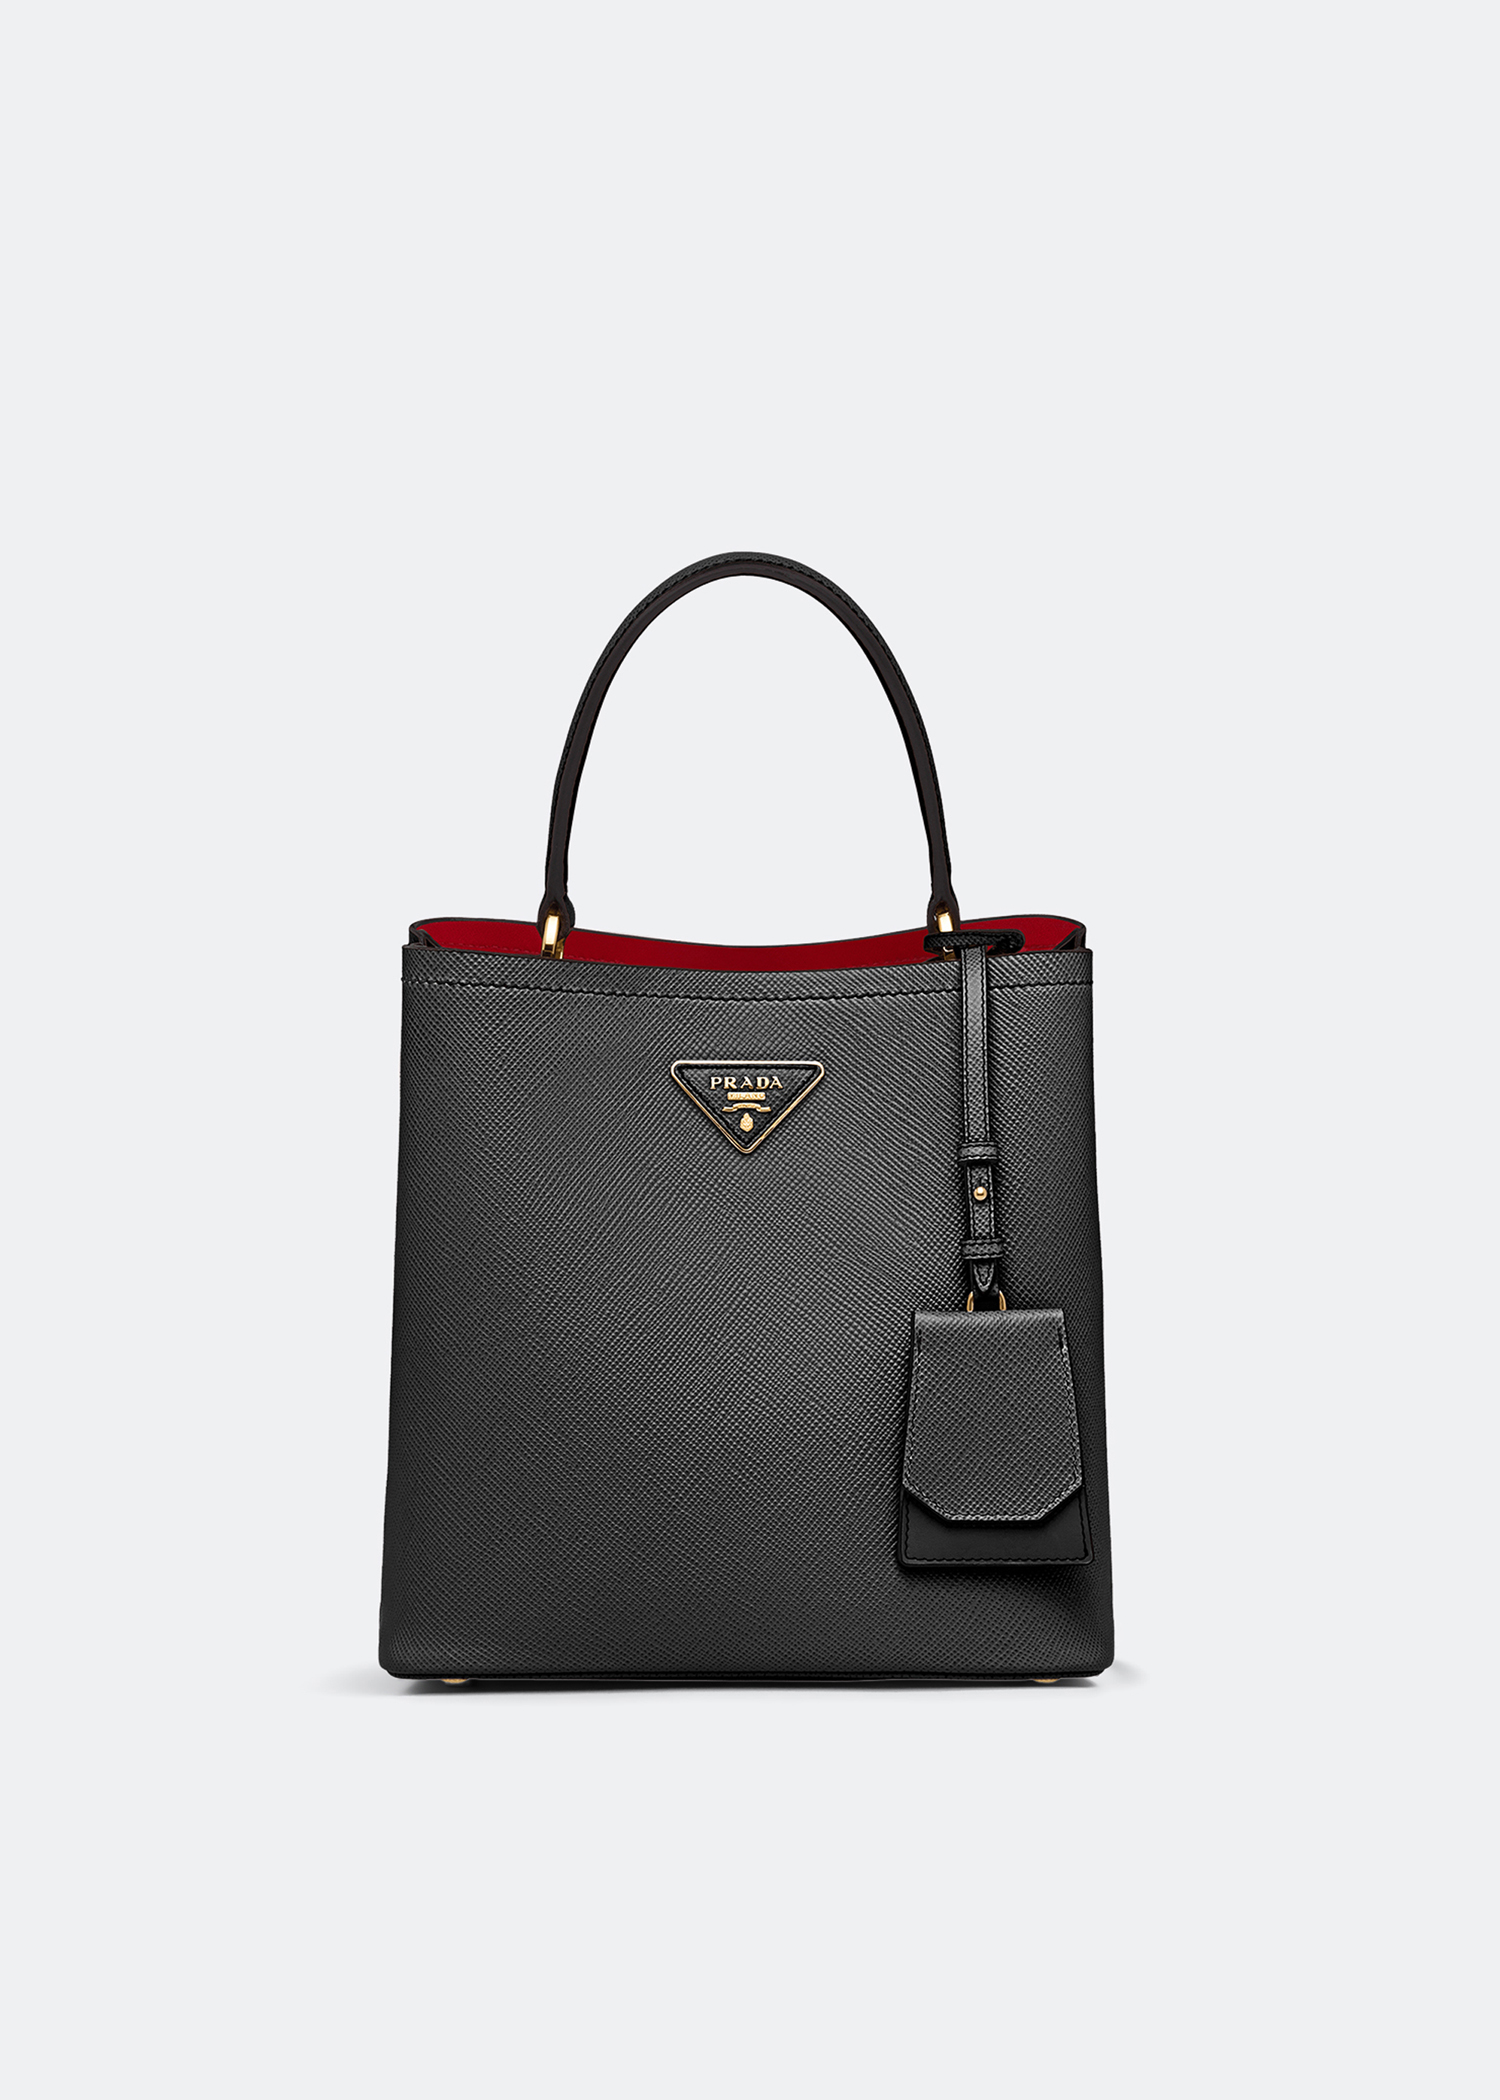 Prada Black Saffiano Leather Medium Panier Top Handle Bag Prada